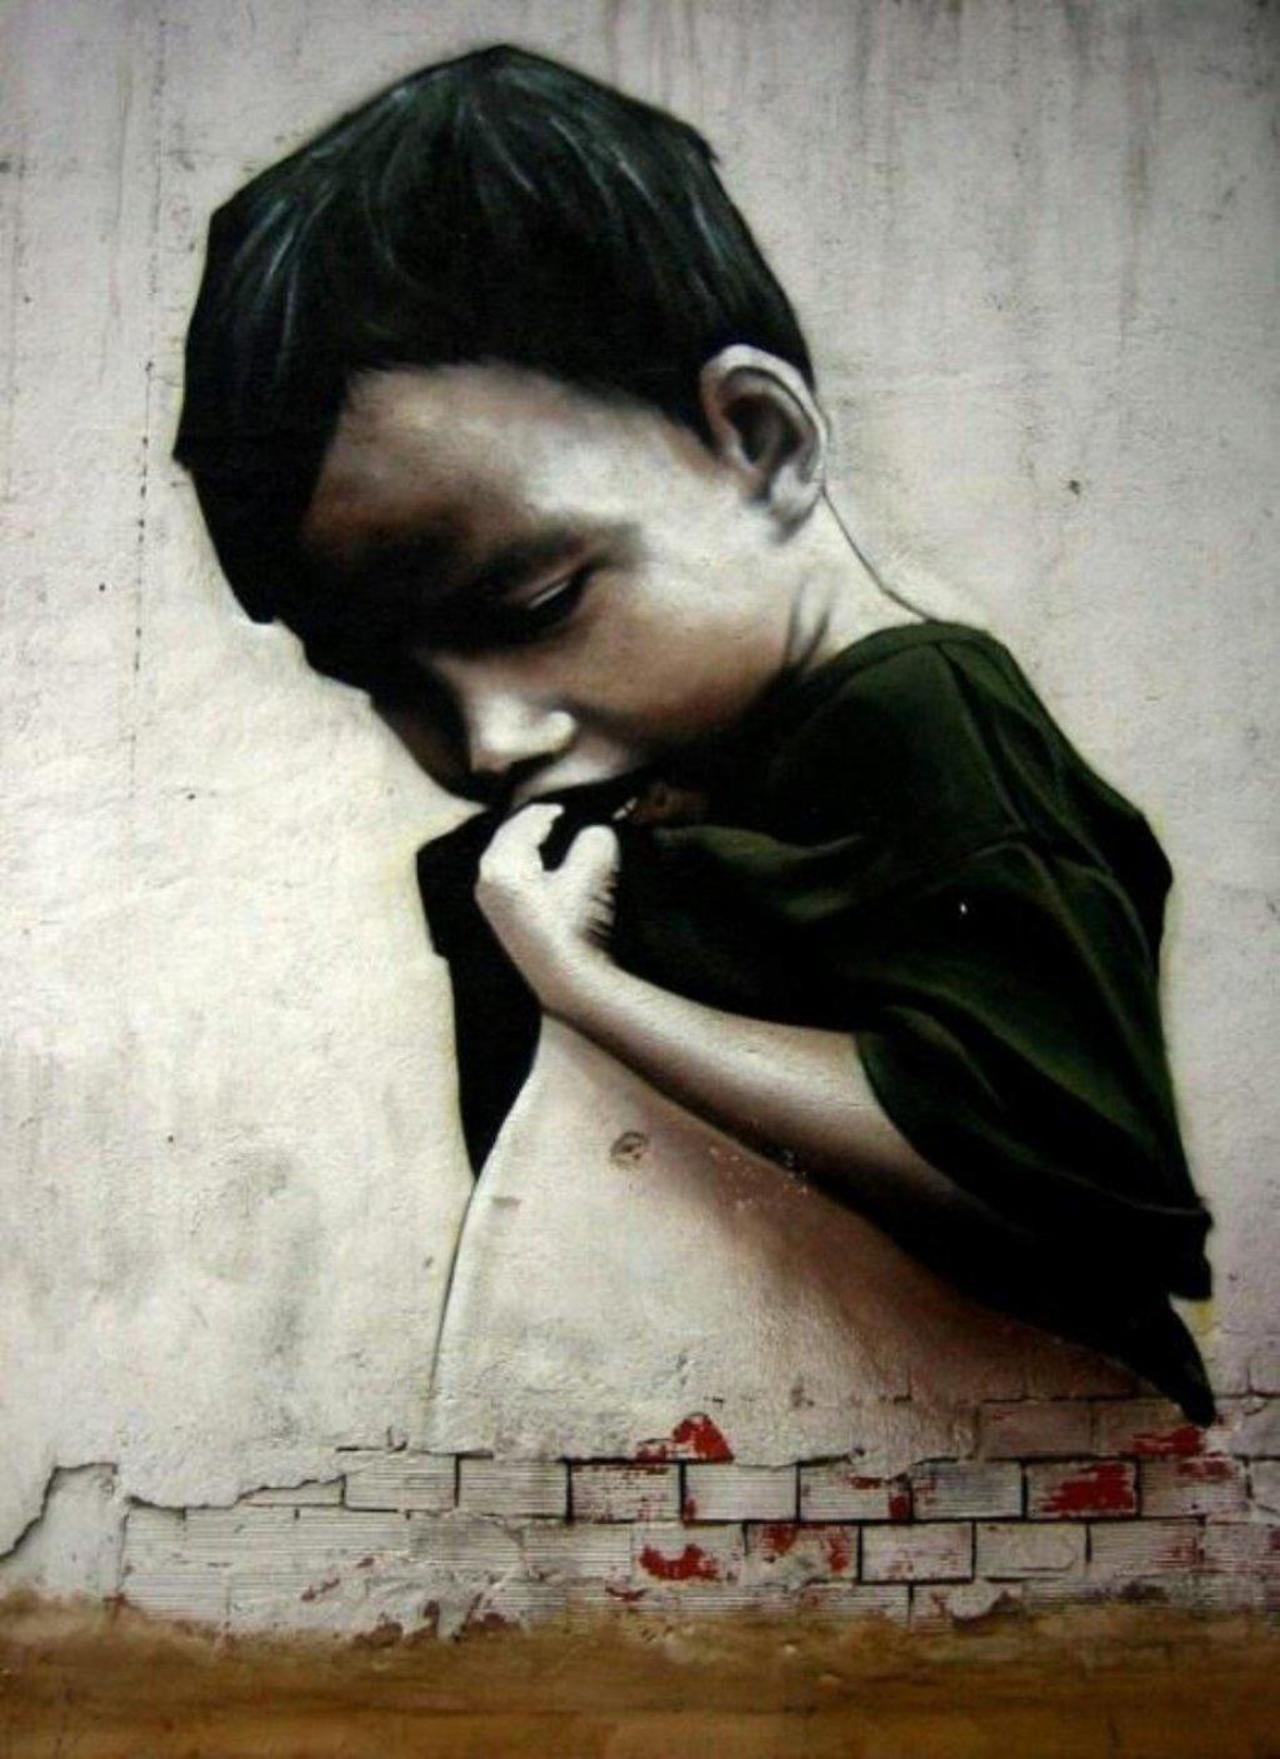 RT @vaneasimivrsa: “@Brindille_: #Streetart #urbanart #painting #graffiti
"Children series" by Spanish #artist Igor Rezola aka "Dizebi" http://t.co/M6WZ5zaJs2